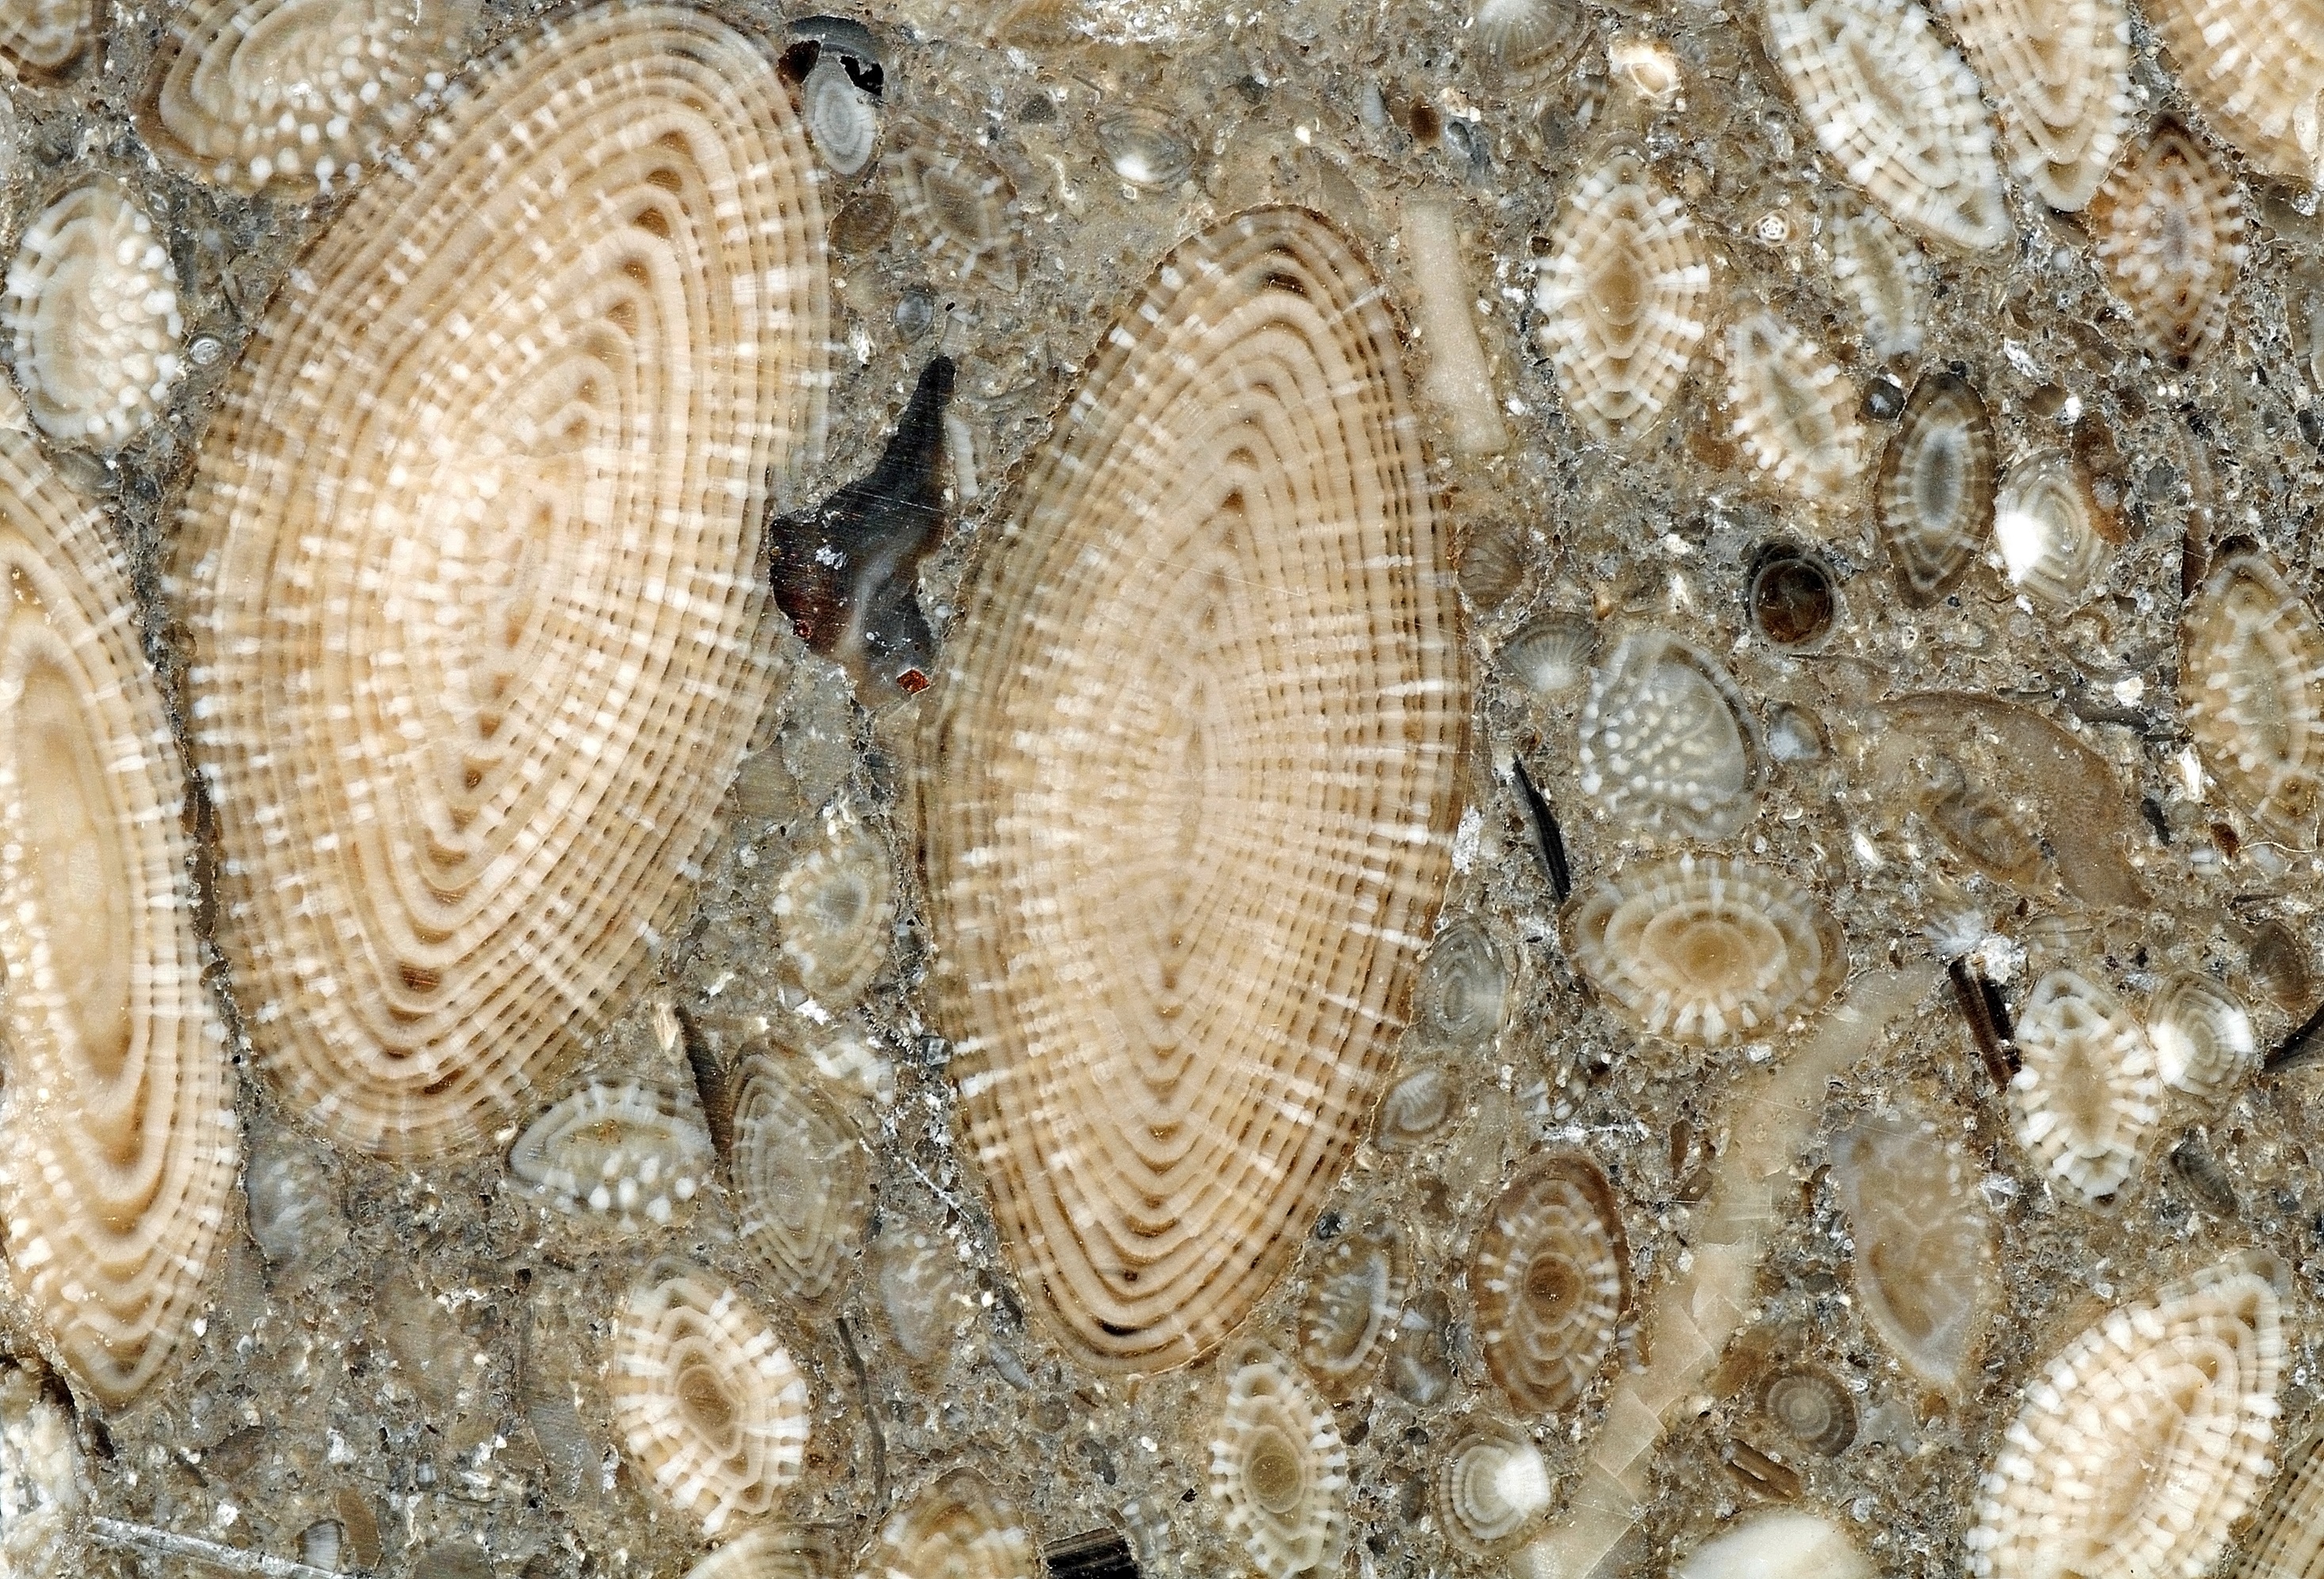 Les nummulites sont des foraminifères marins fossiles. © Parent Géry, Wikimedia Commons, CC by-sa 3.0